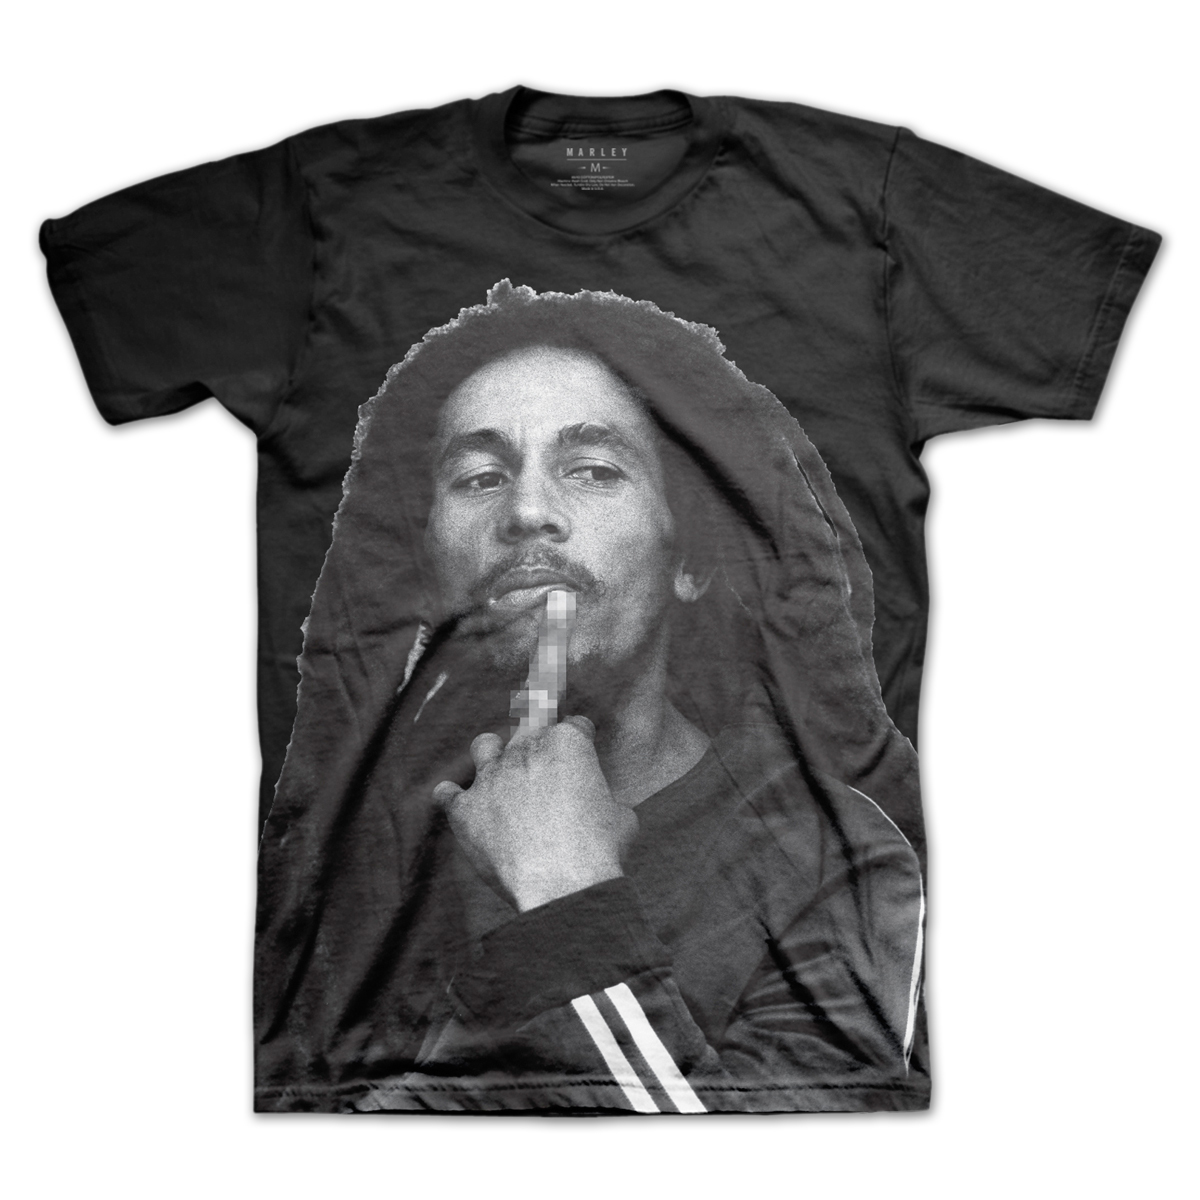 Bob Marley Mosaic Finger Charcoal T-Shirt – Men’s at RastaEmpire.com